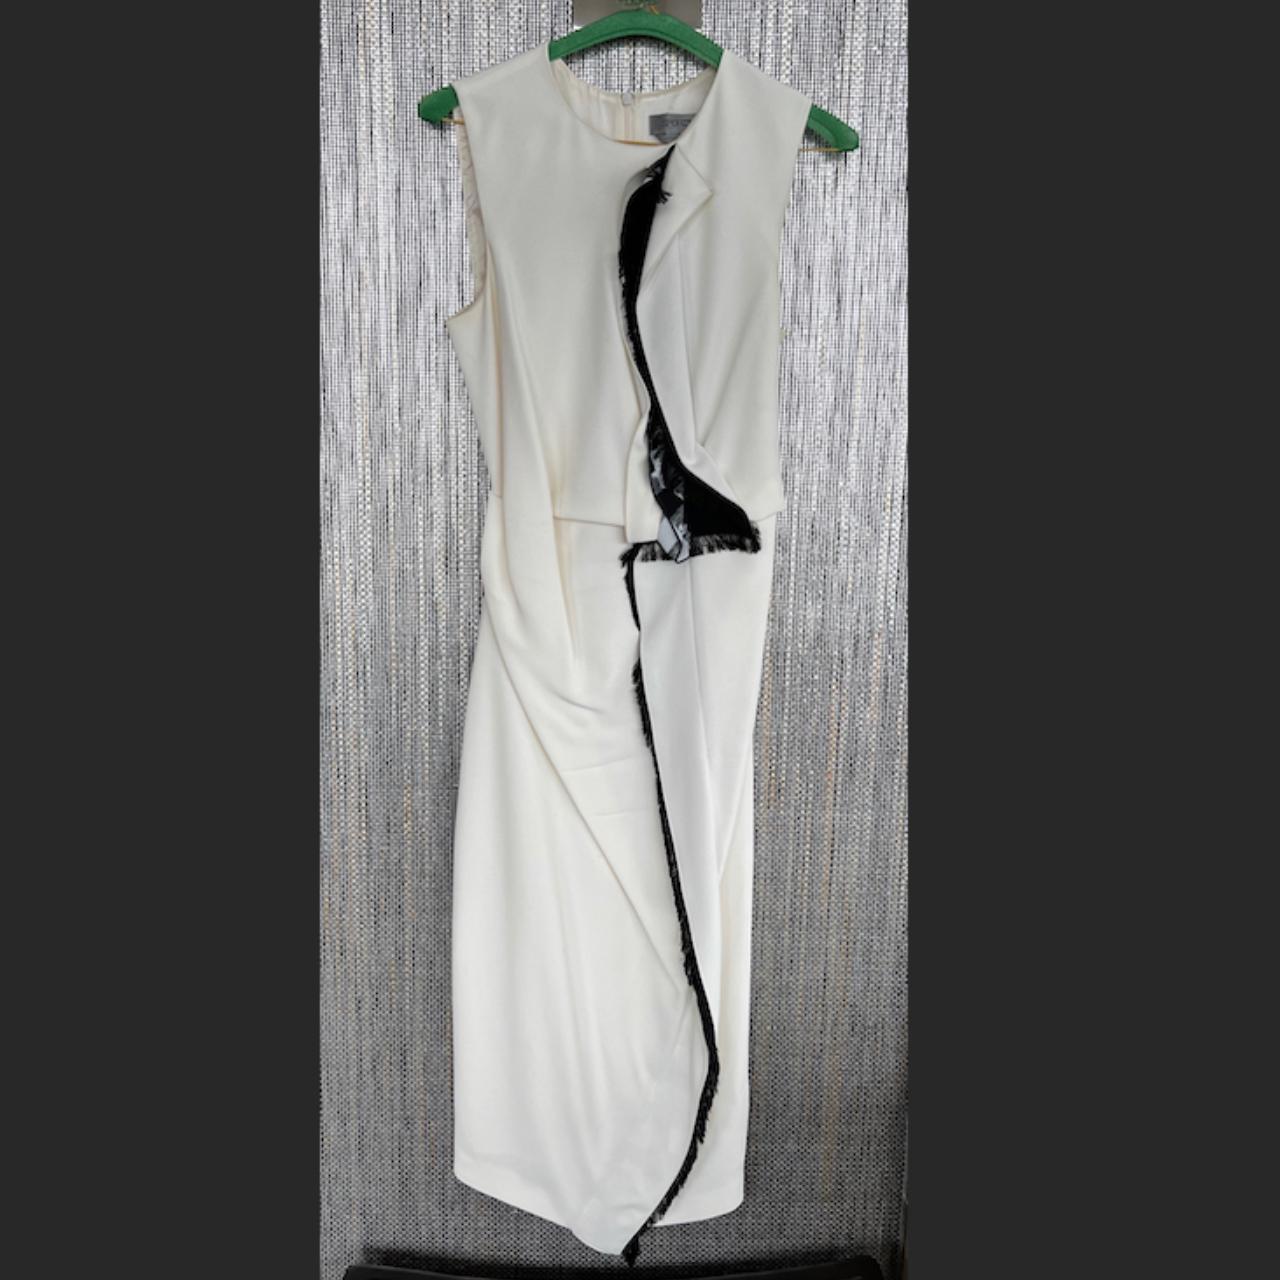 Sportmax Women's White Dress